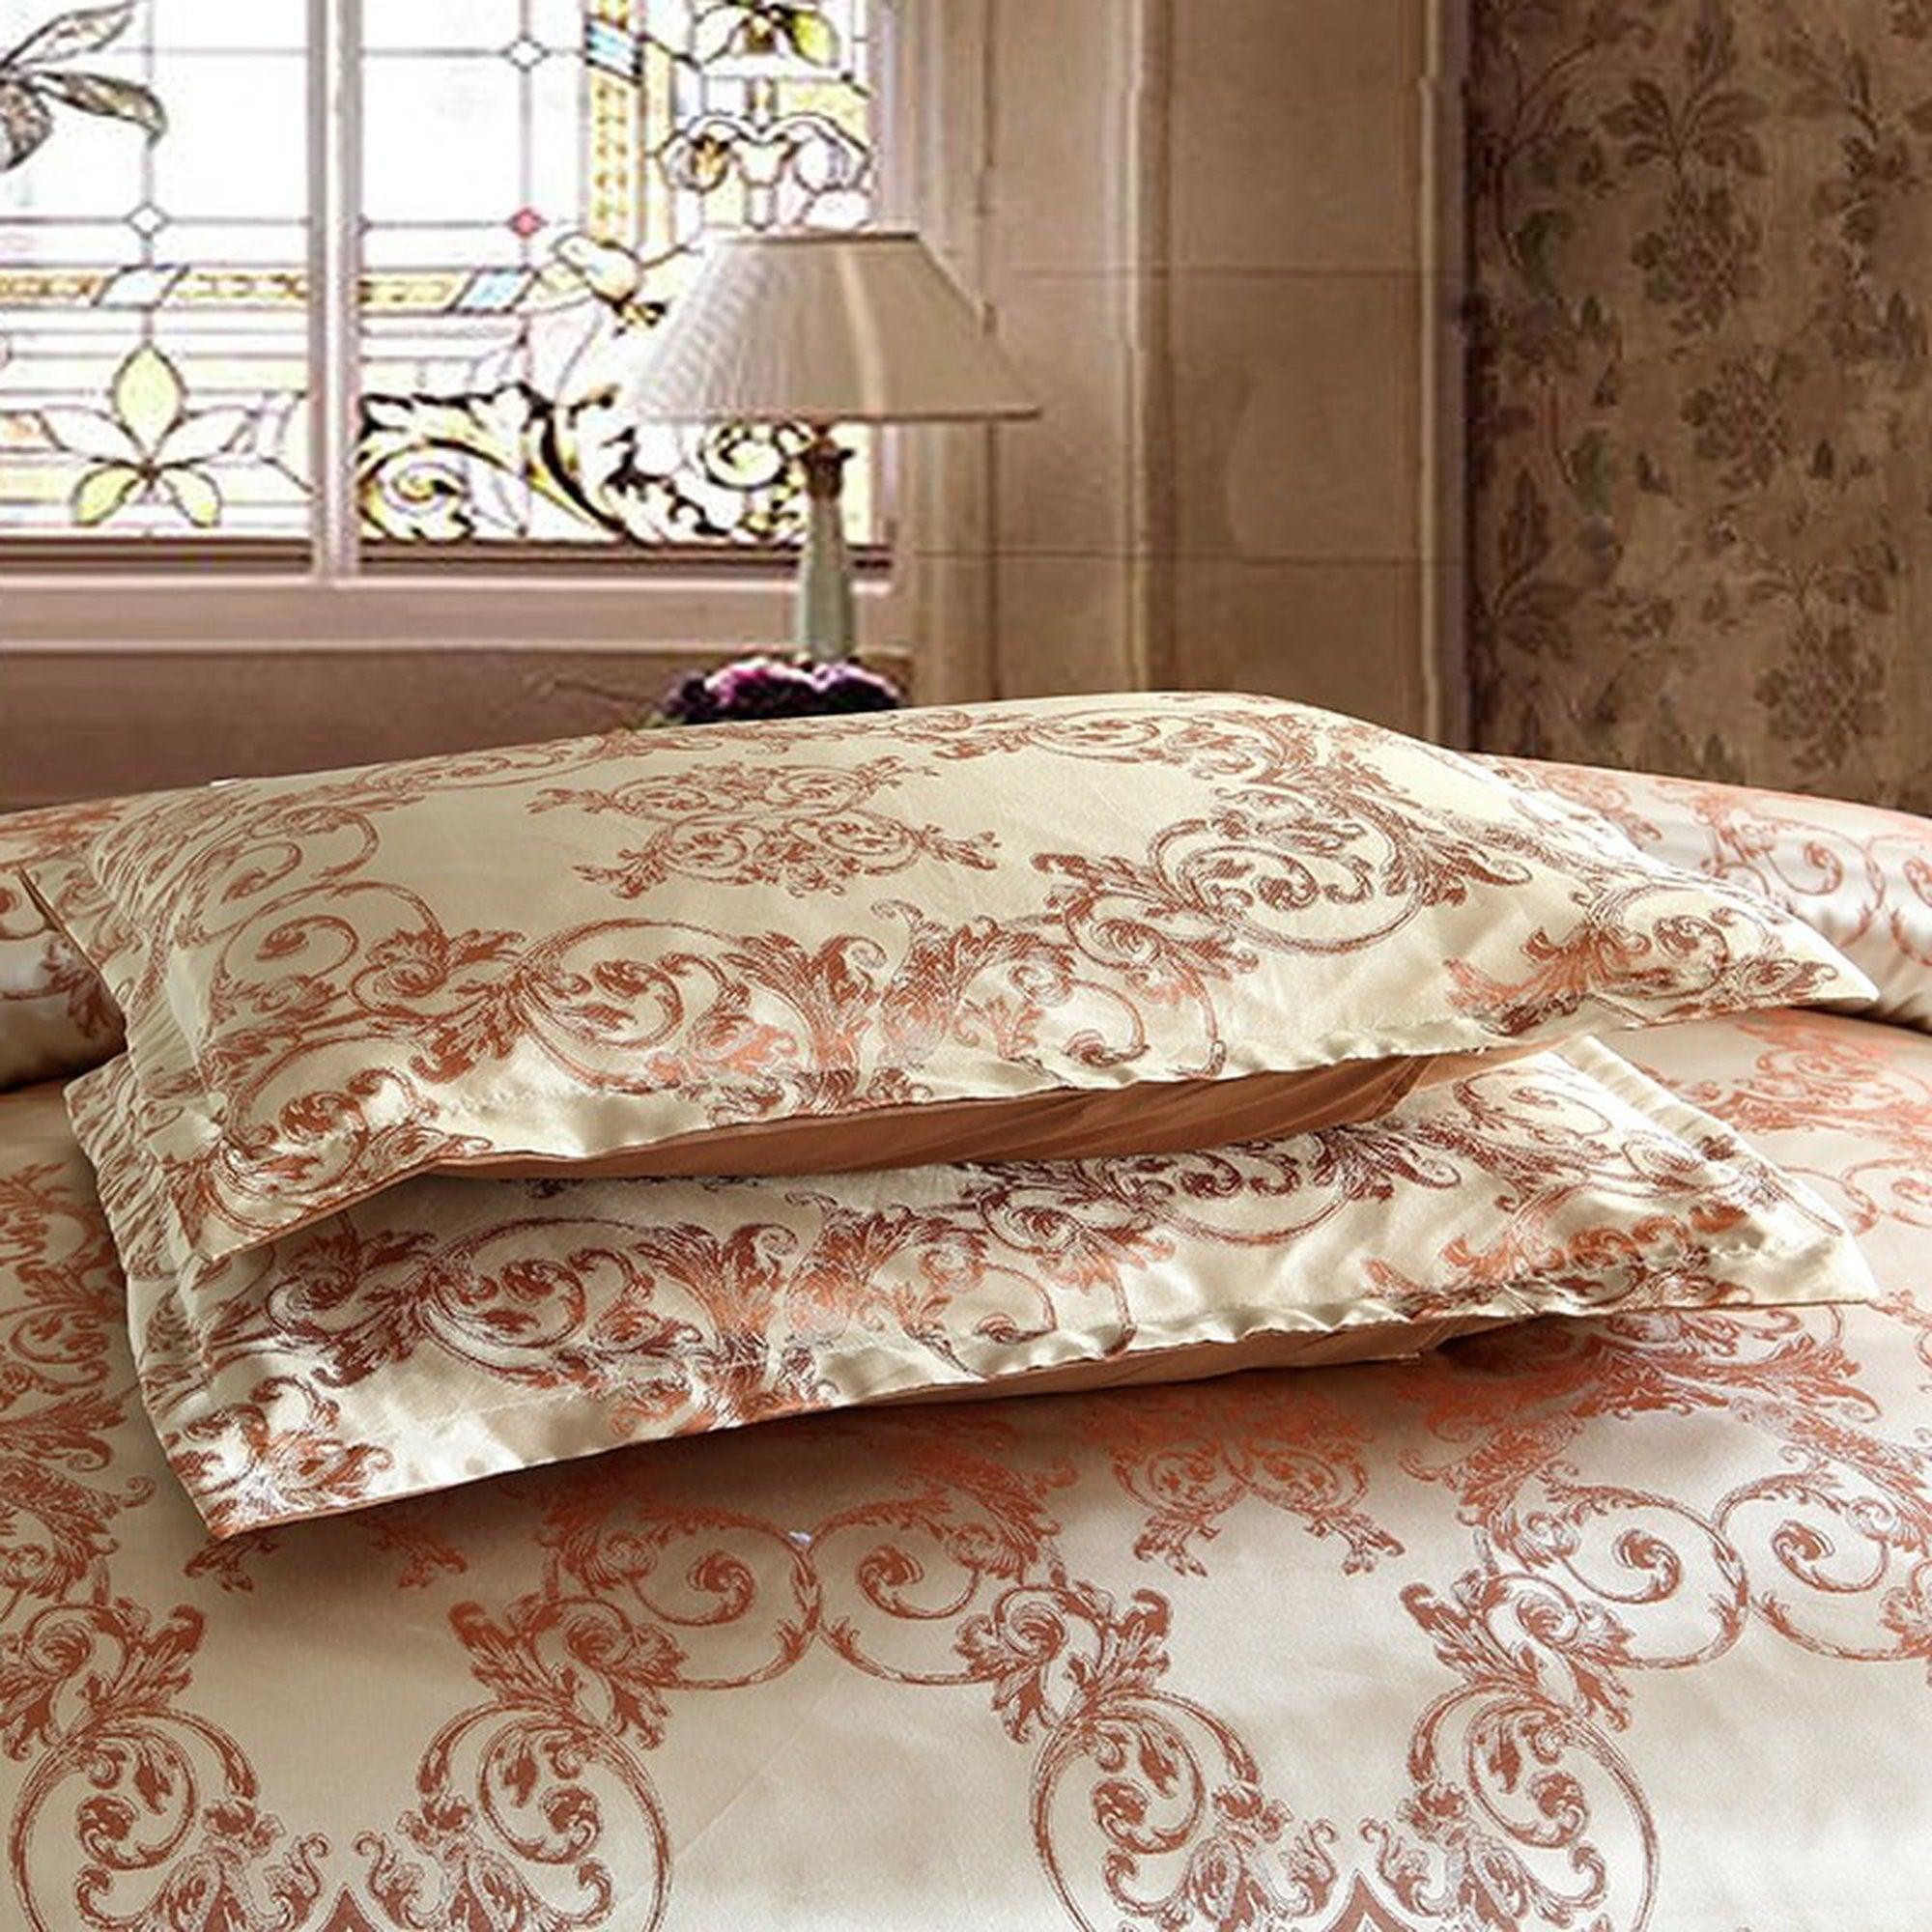 daintyduvet Luxury Copper Gold Bedding made with Silky Jacquard Fabric, Damask Duvet Cover Set, Designer Bedding, Aesthetic Duvet King Queen Full Twin